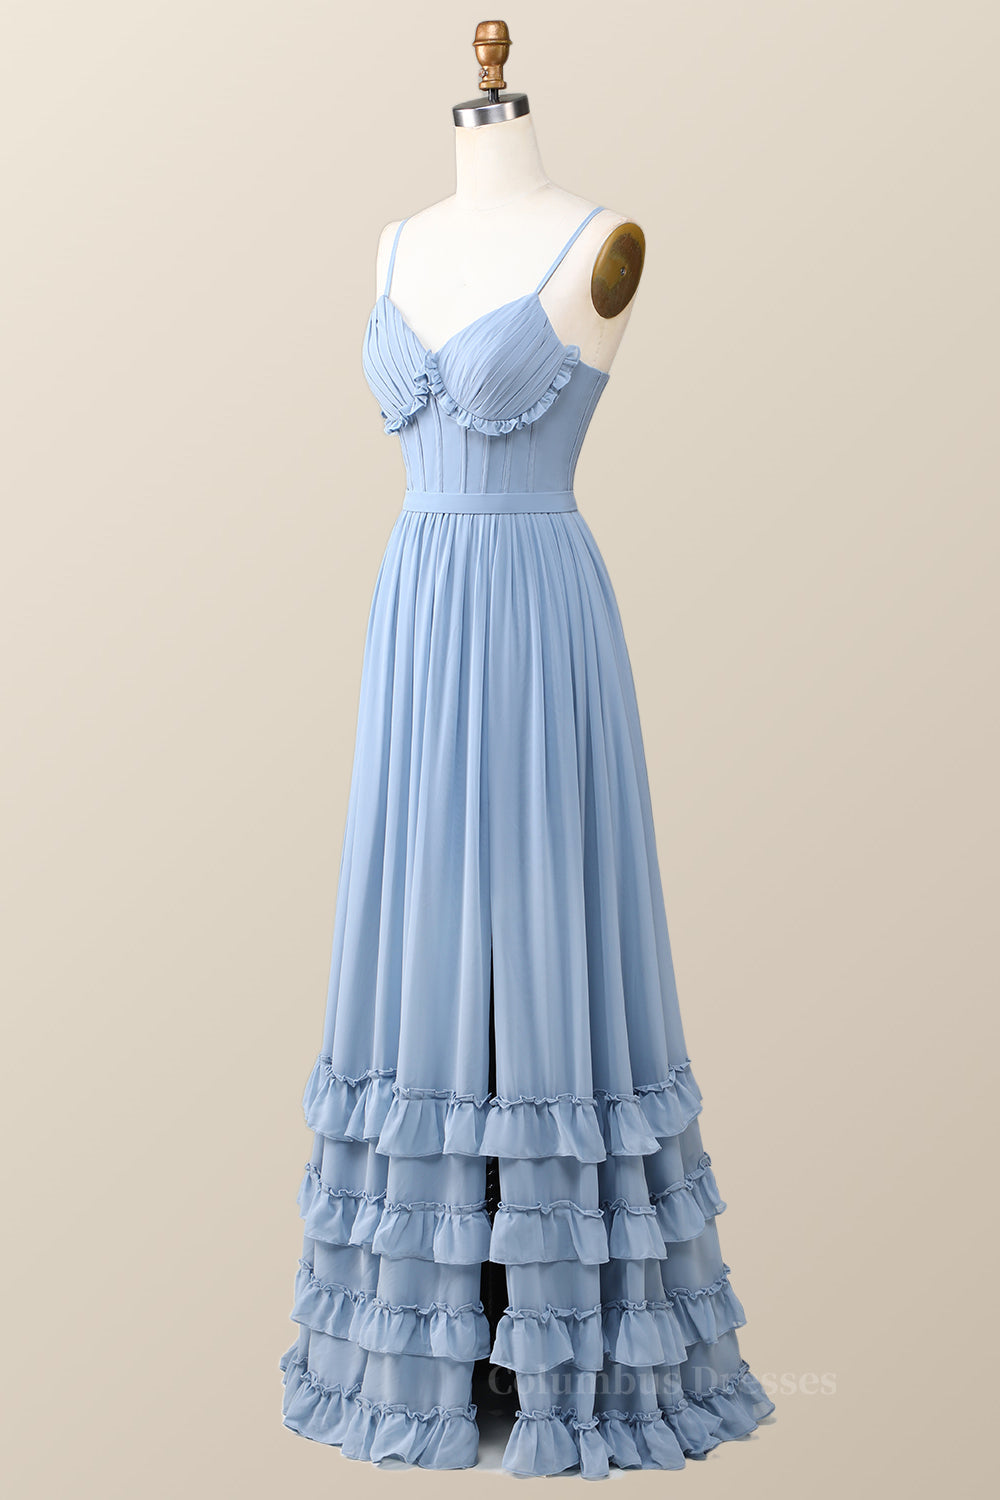 Long Dress Outfit, Boho Style Dusty Blue Ruffles Long Bridesmaid Dress